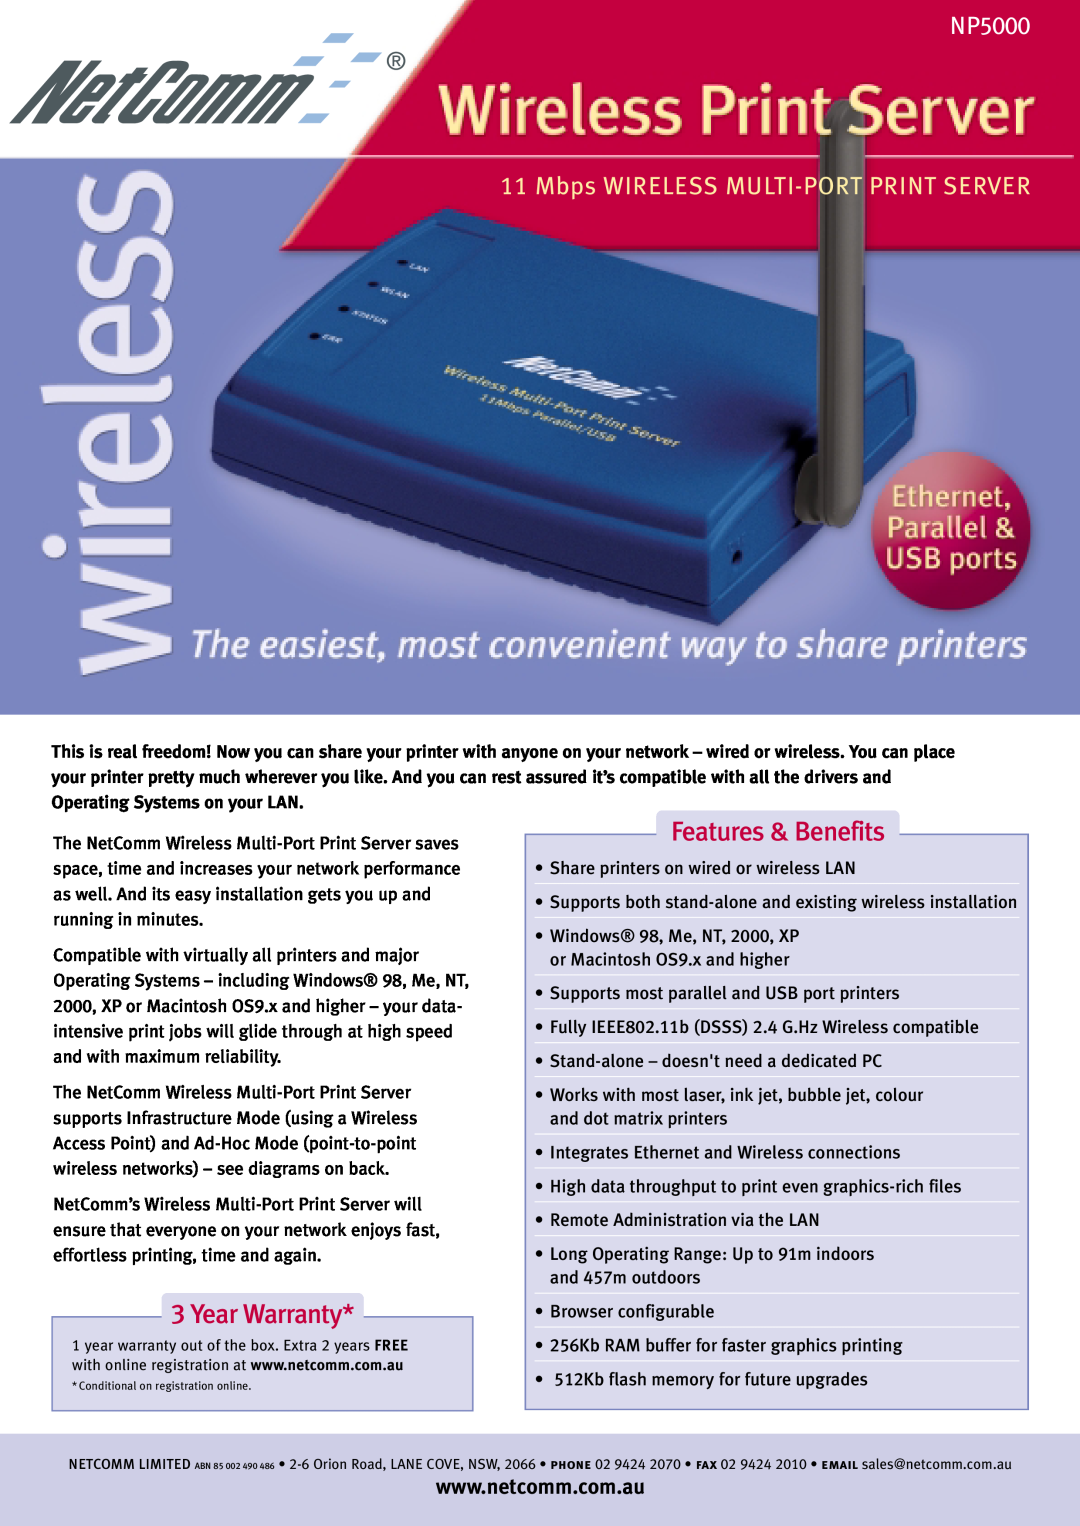 NetComm NP5000 warranty Mbps WIRELESS MULTI-PORT PRINT SERVER, Year Warranty, Features & Benefits 